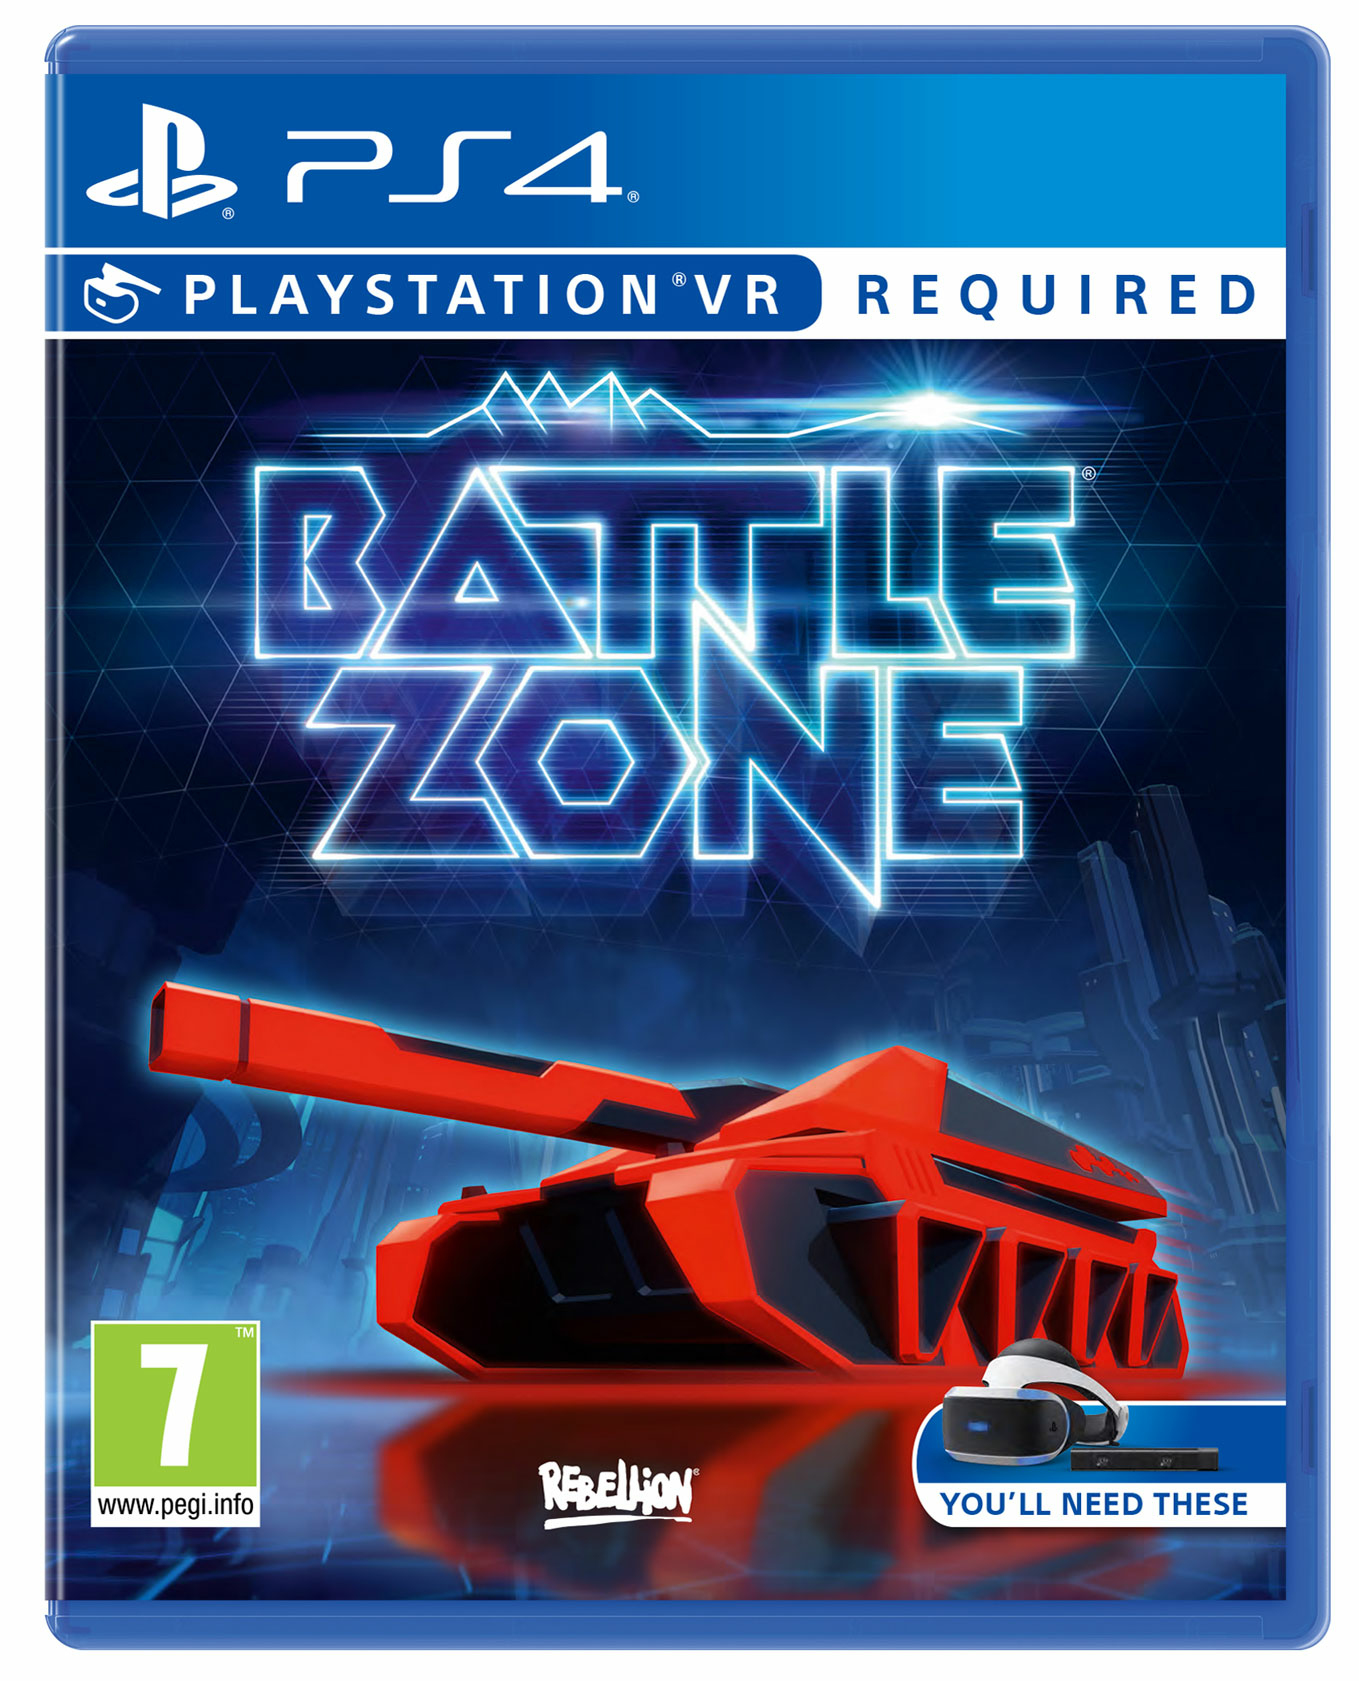 battlezone 2 playstation